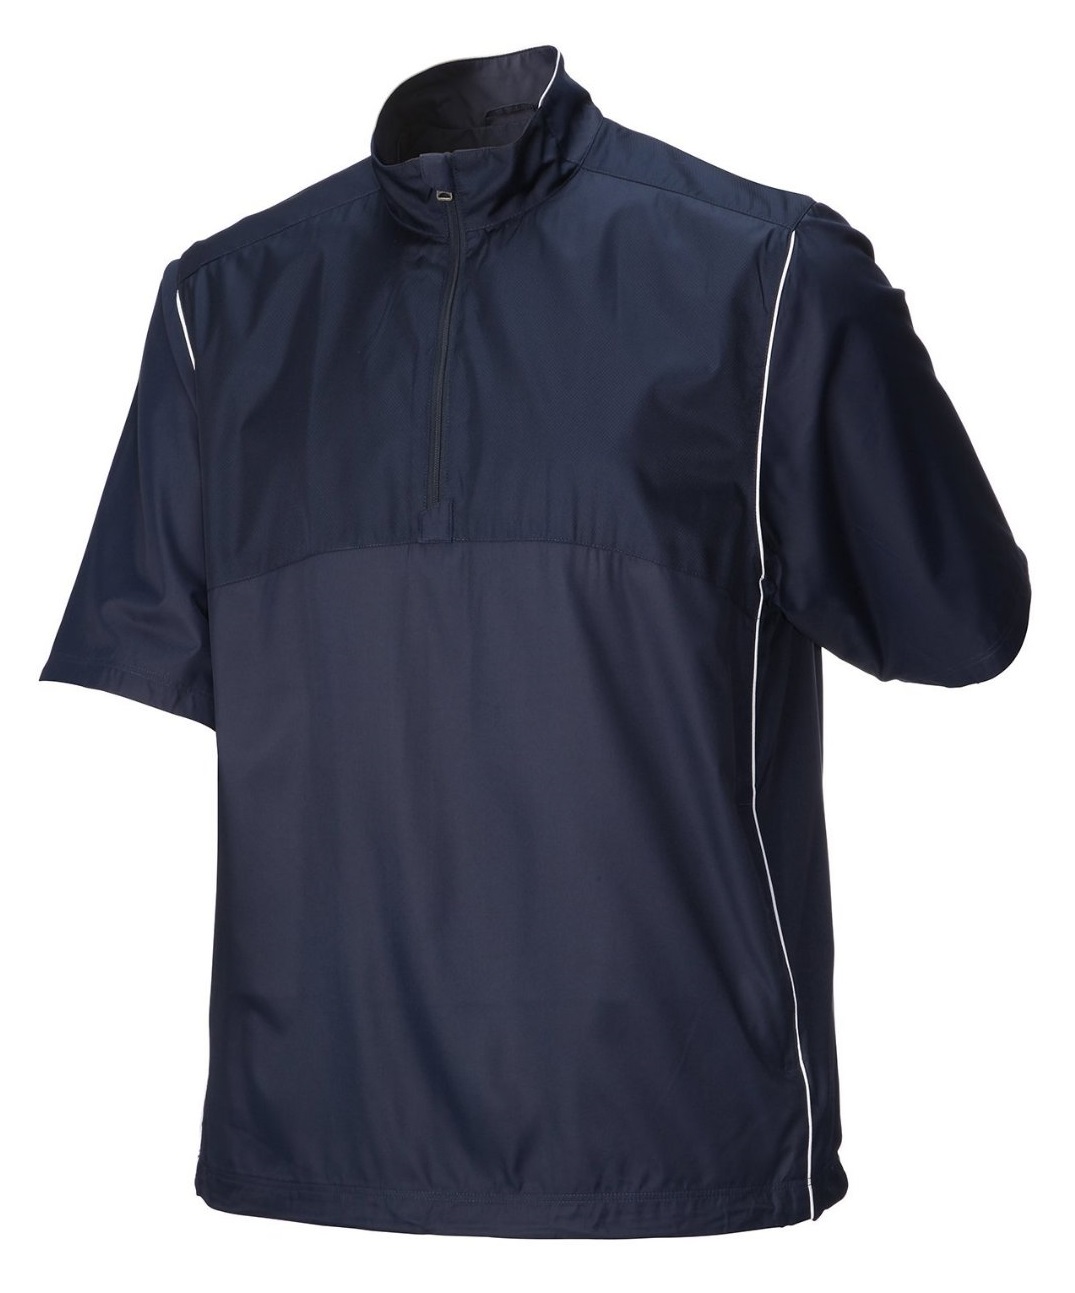 Greg Norman Short Sleeve Golf Jackets